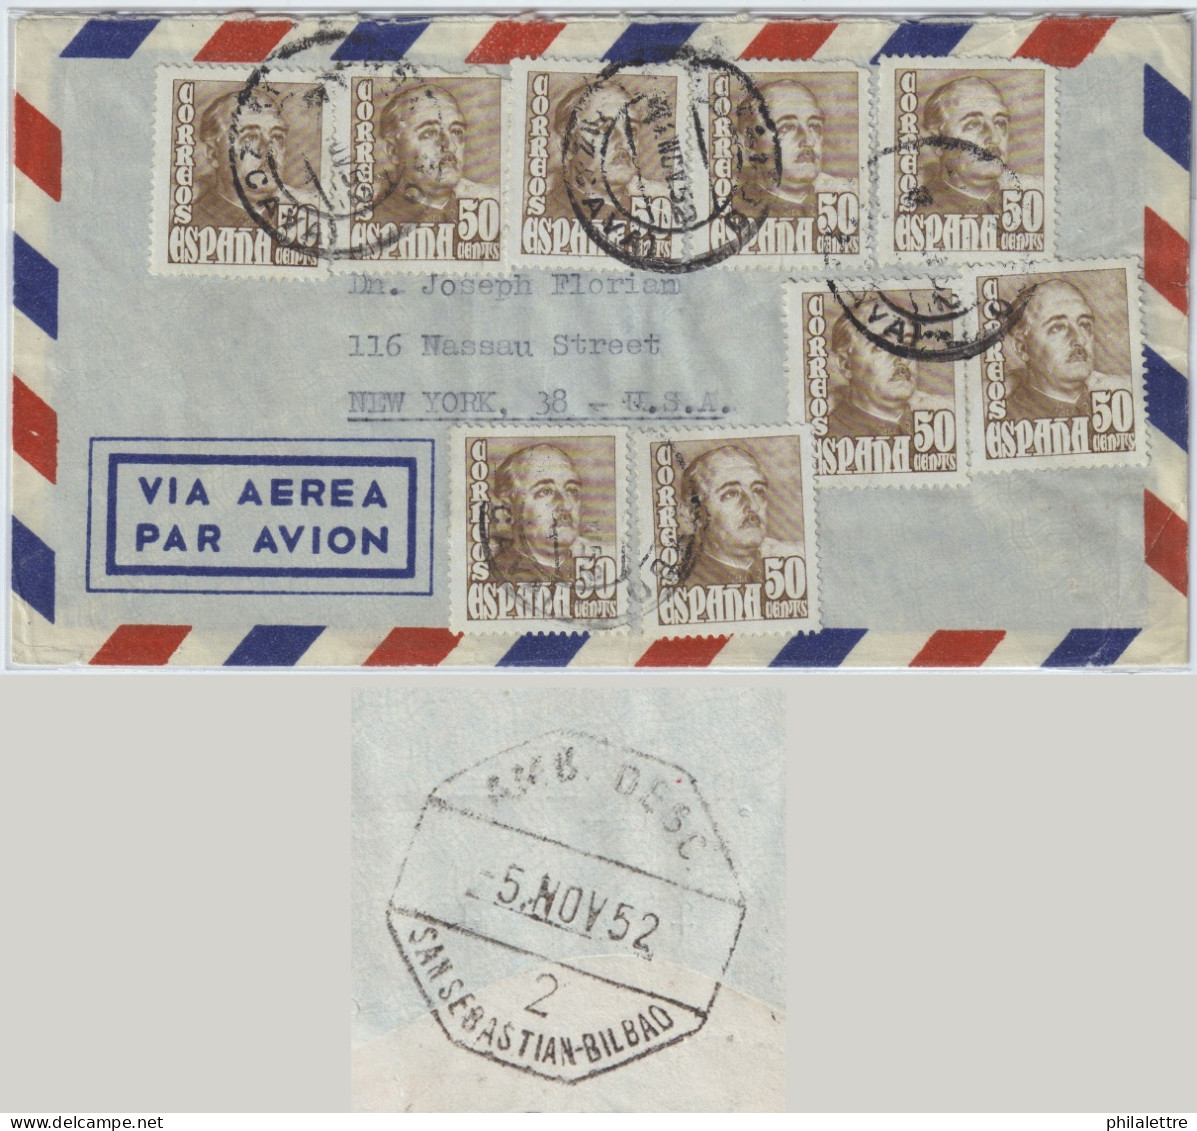 ESPAGNE / ESPAÑA - 1952 9x Ed.1022 En Carta Por Avion De Bilbao A Nueva York, EE.UU. (Matasello Ambulante Al Dorso) - Covers & Documents